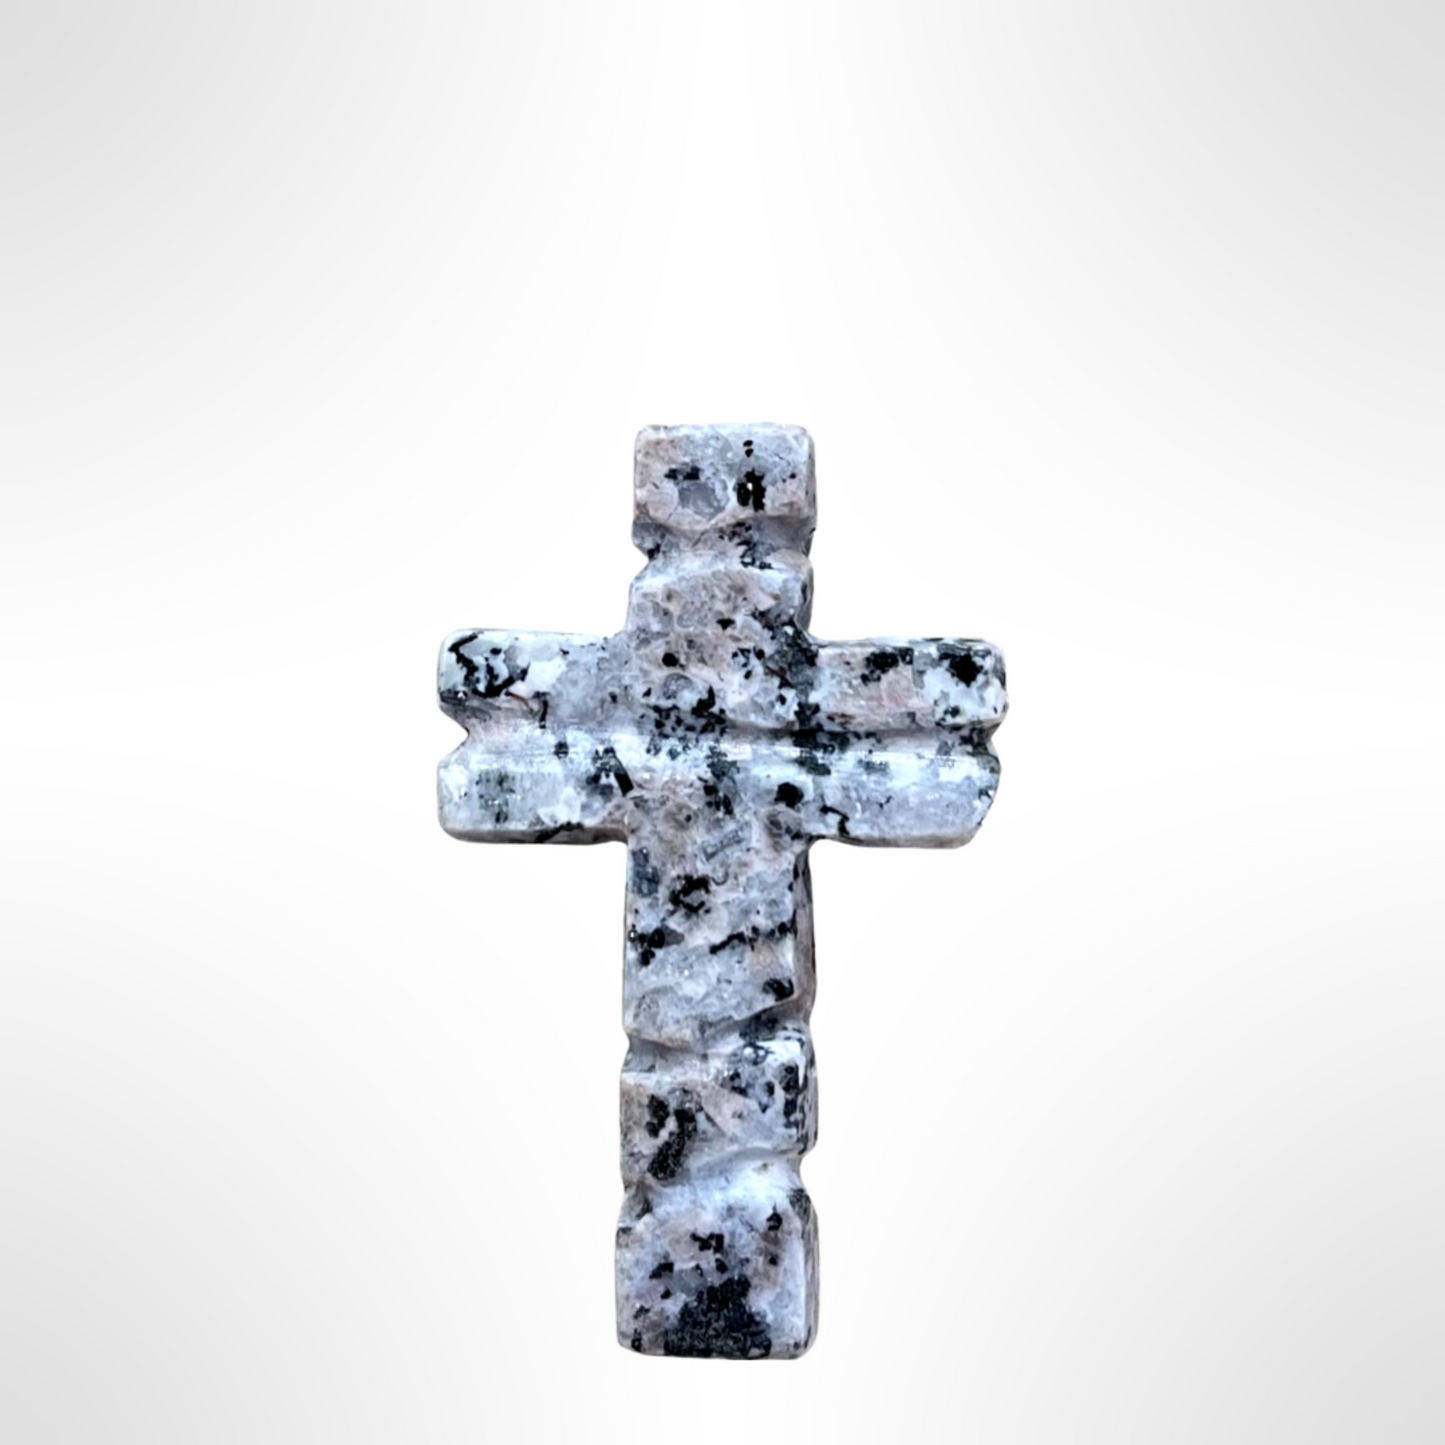 Prayer Cross - Granite (2 inch)